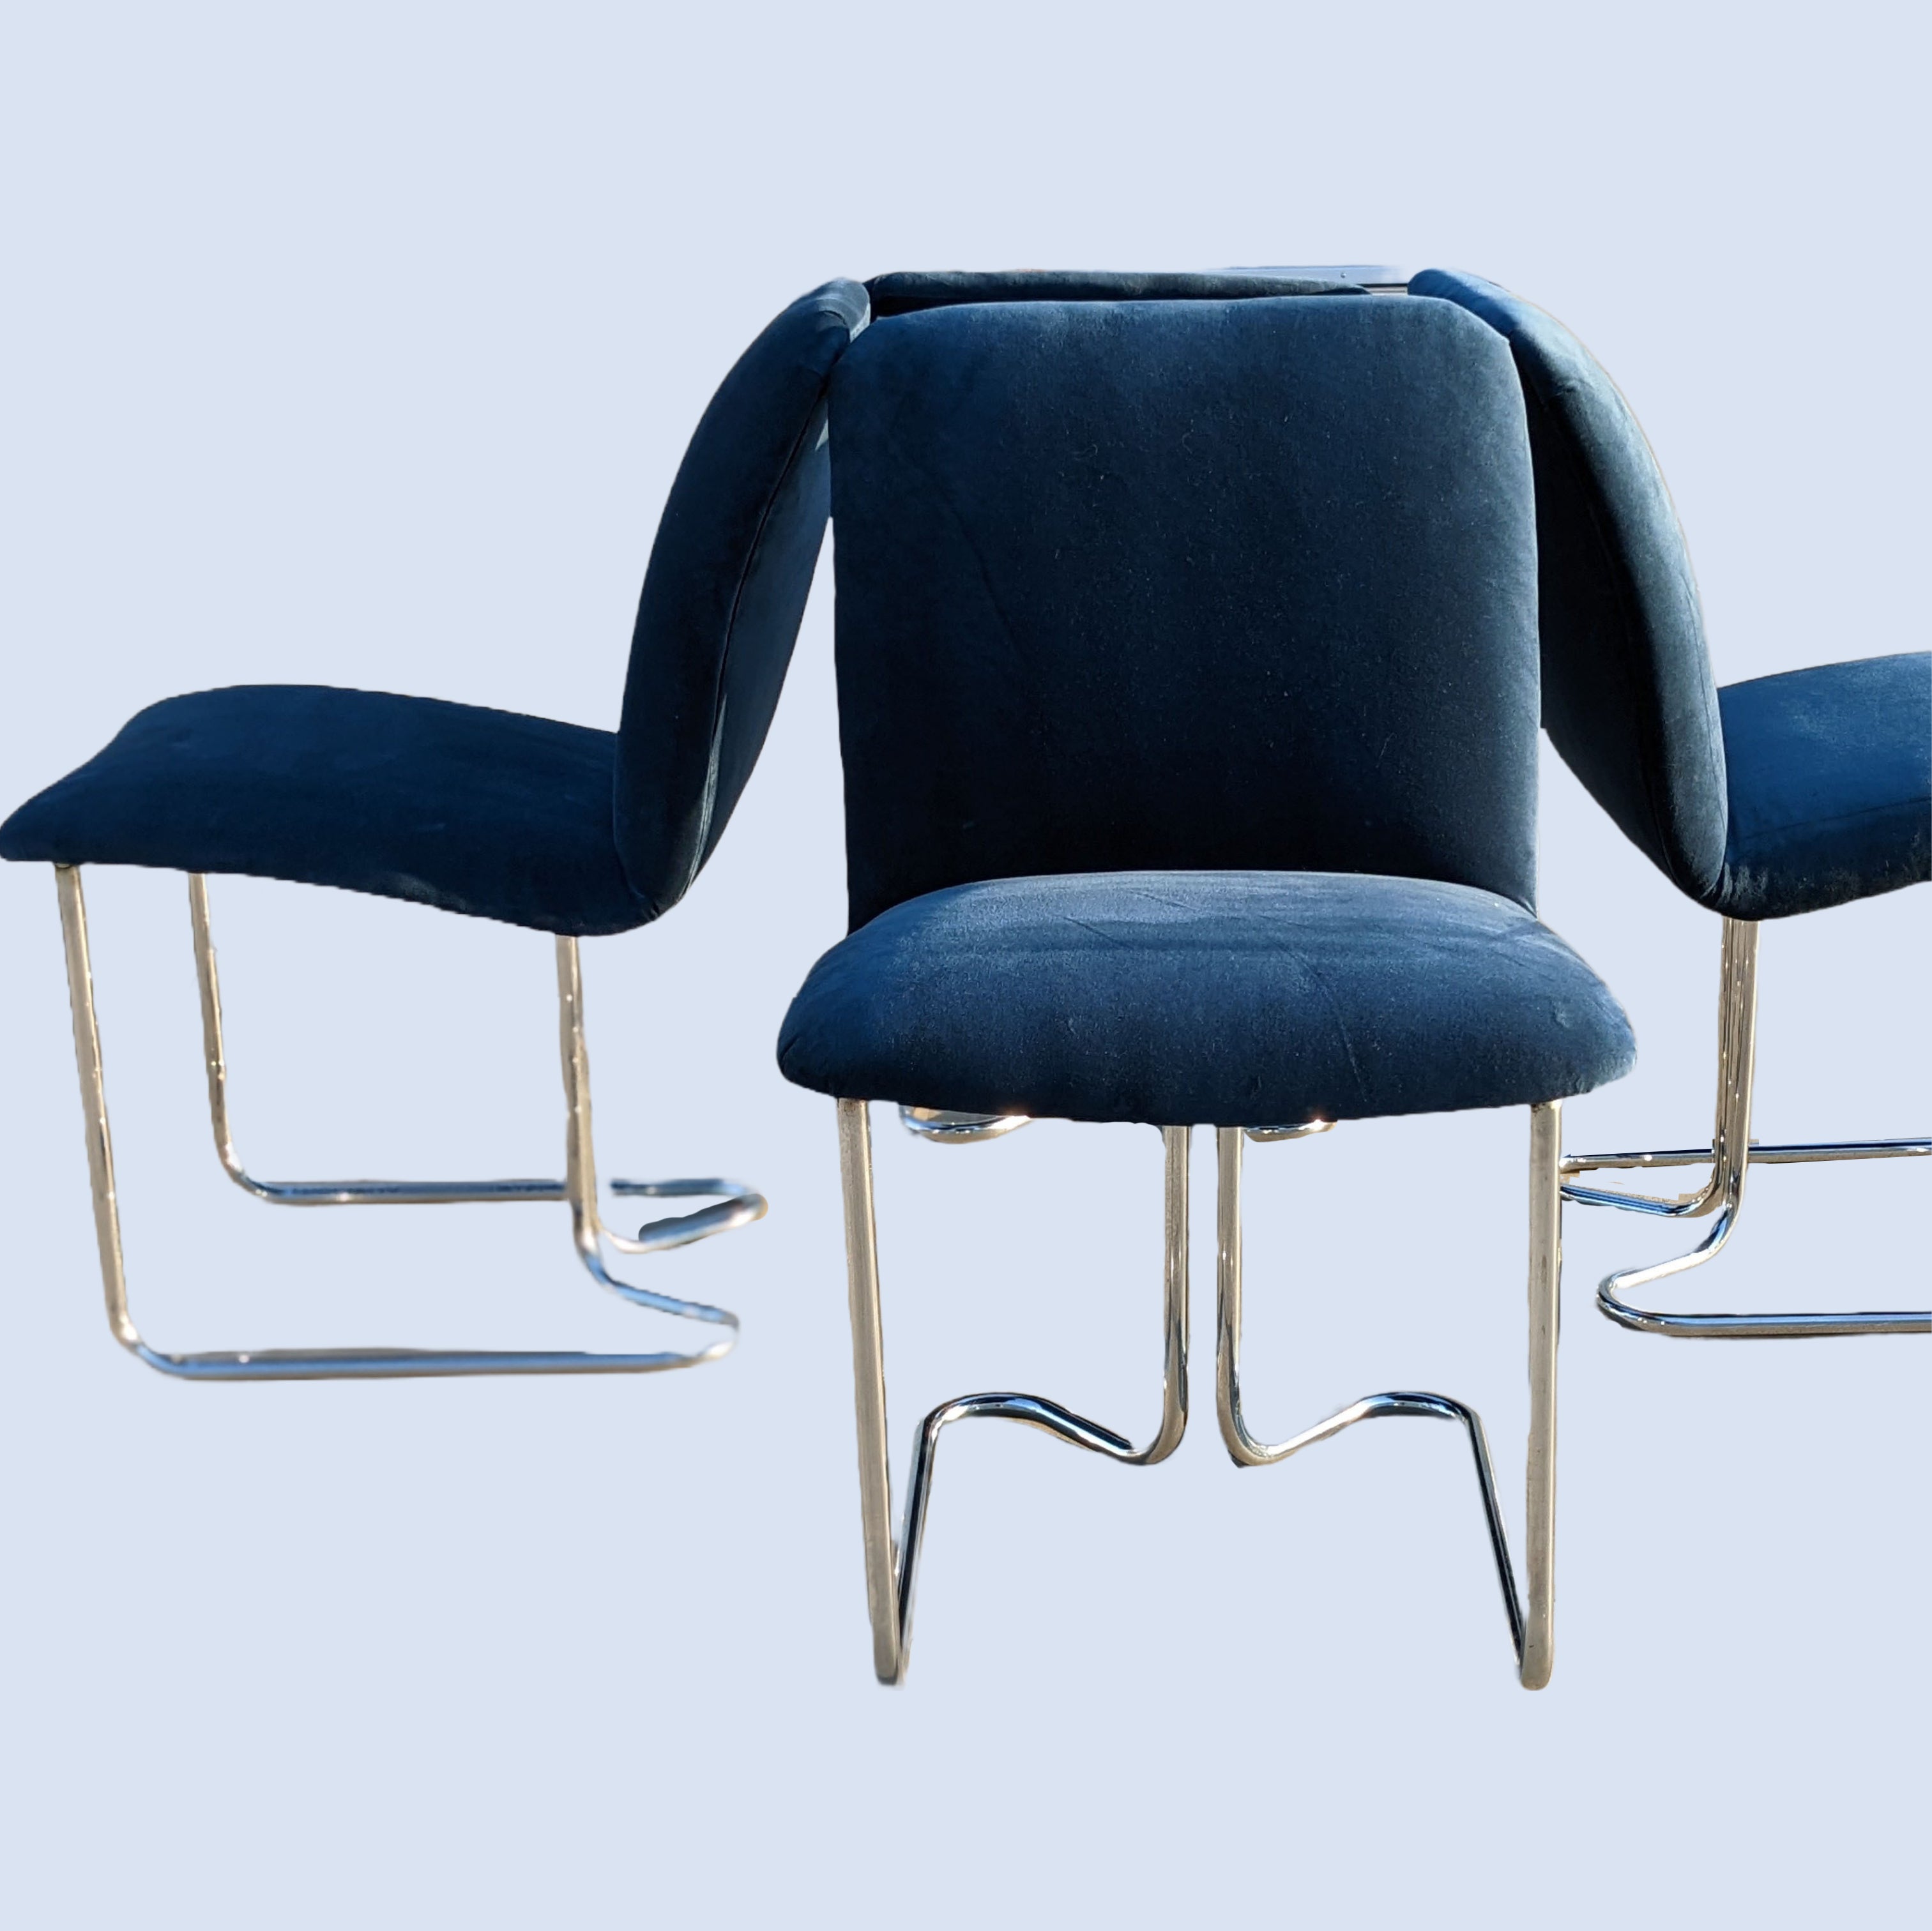 Tubular Baughman Blue S Milo | Casa – DIA Chairs Bauhaus Chrome Velvet | for | Dining